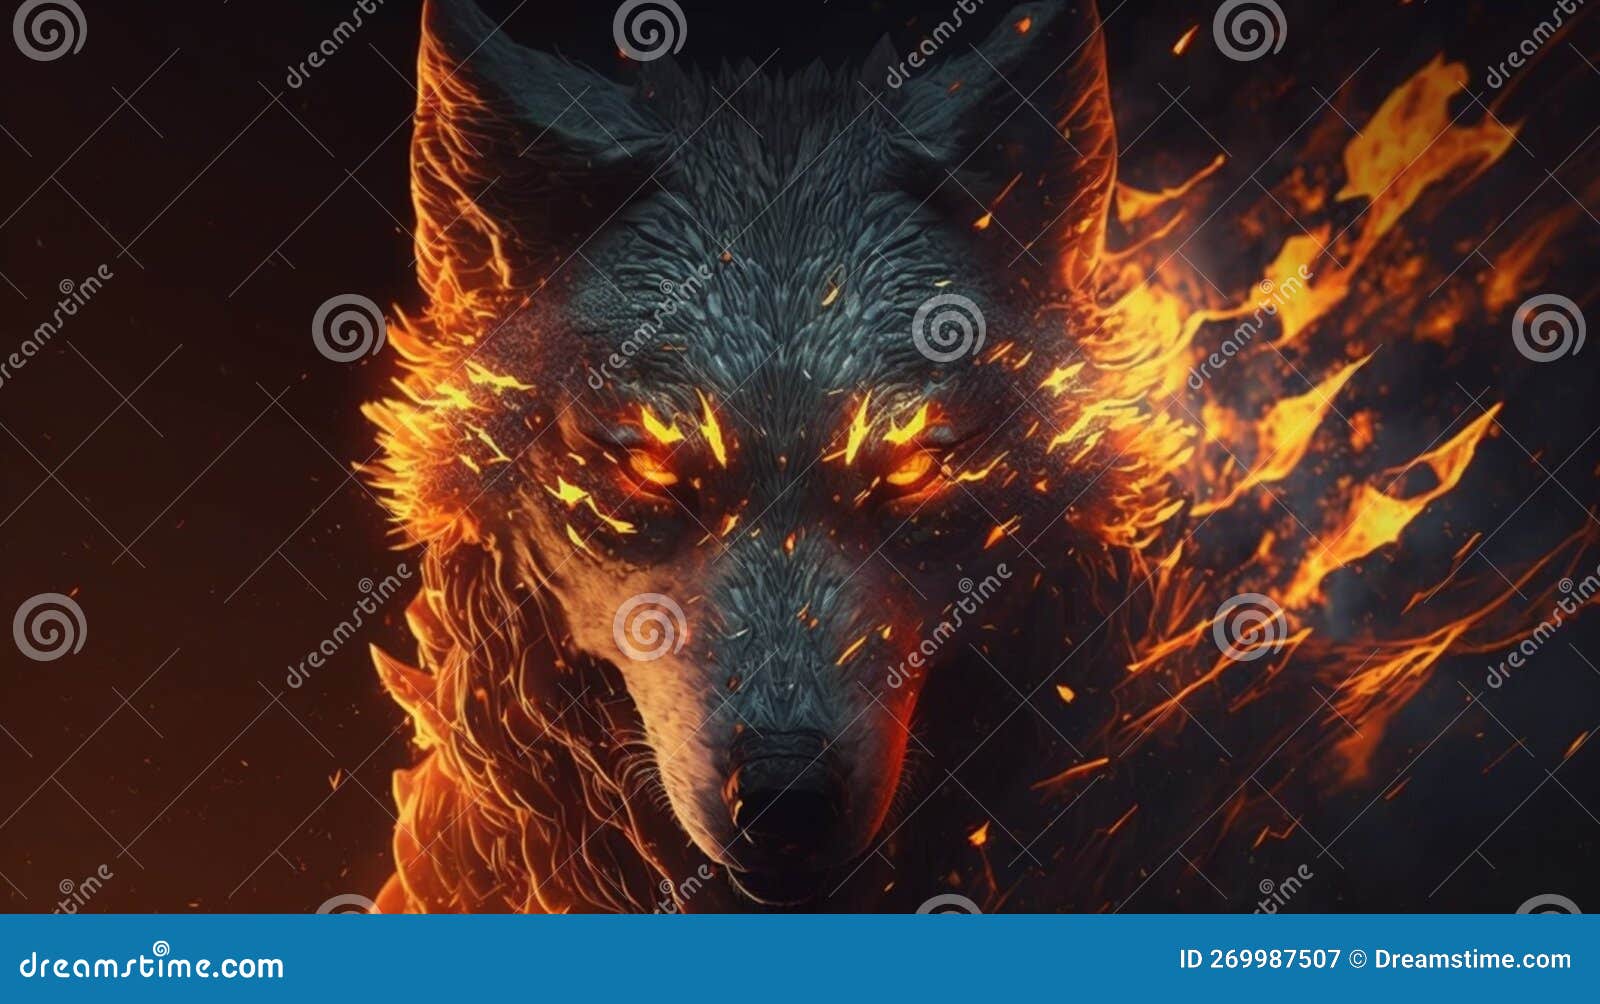 Rimefang Wolf Legends of Runeterra  League of Legends LOL 4K wallpaper  download